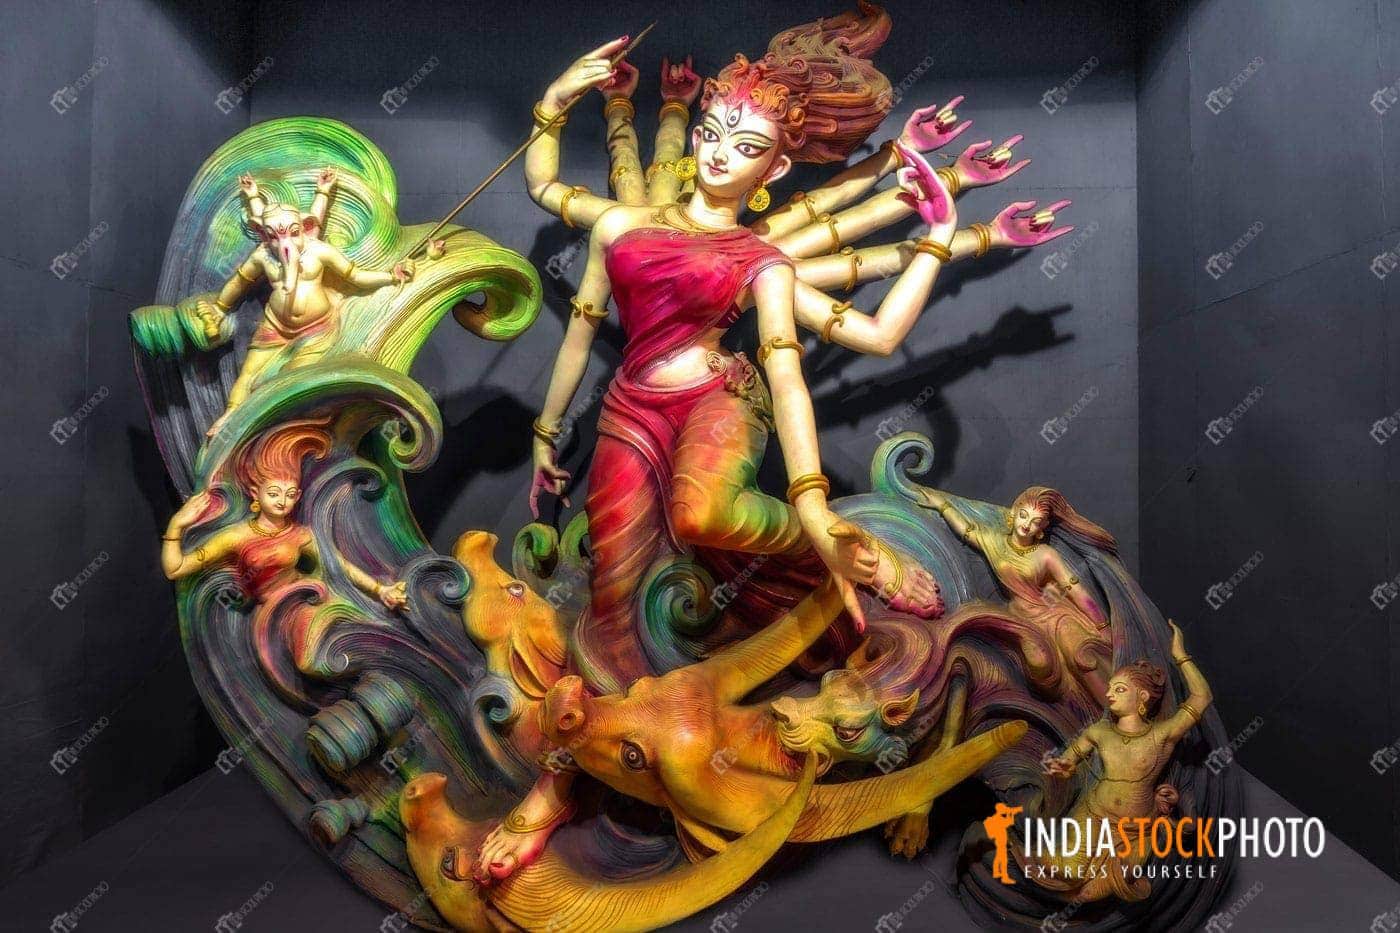 Artistic Indian Goddess Durga idol made of terracotta